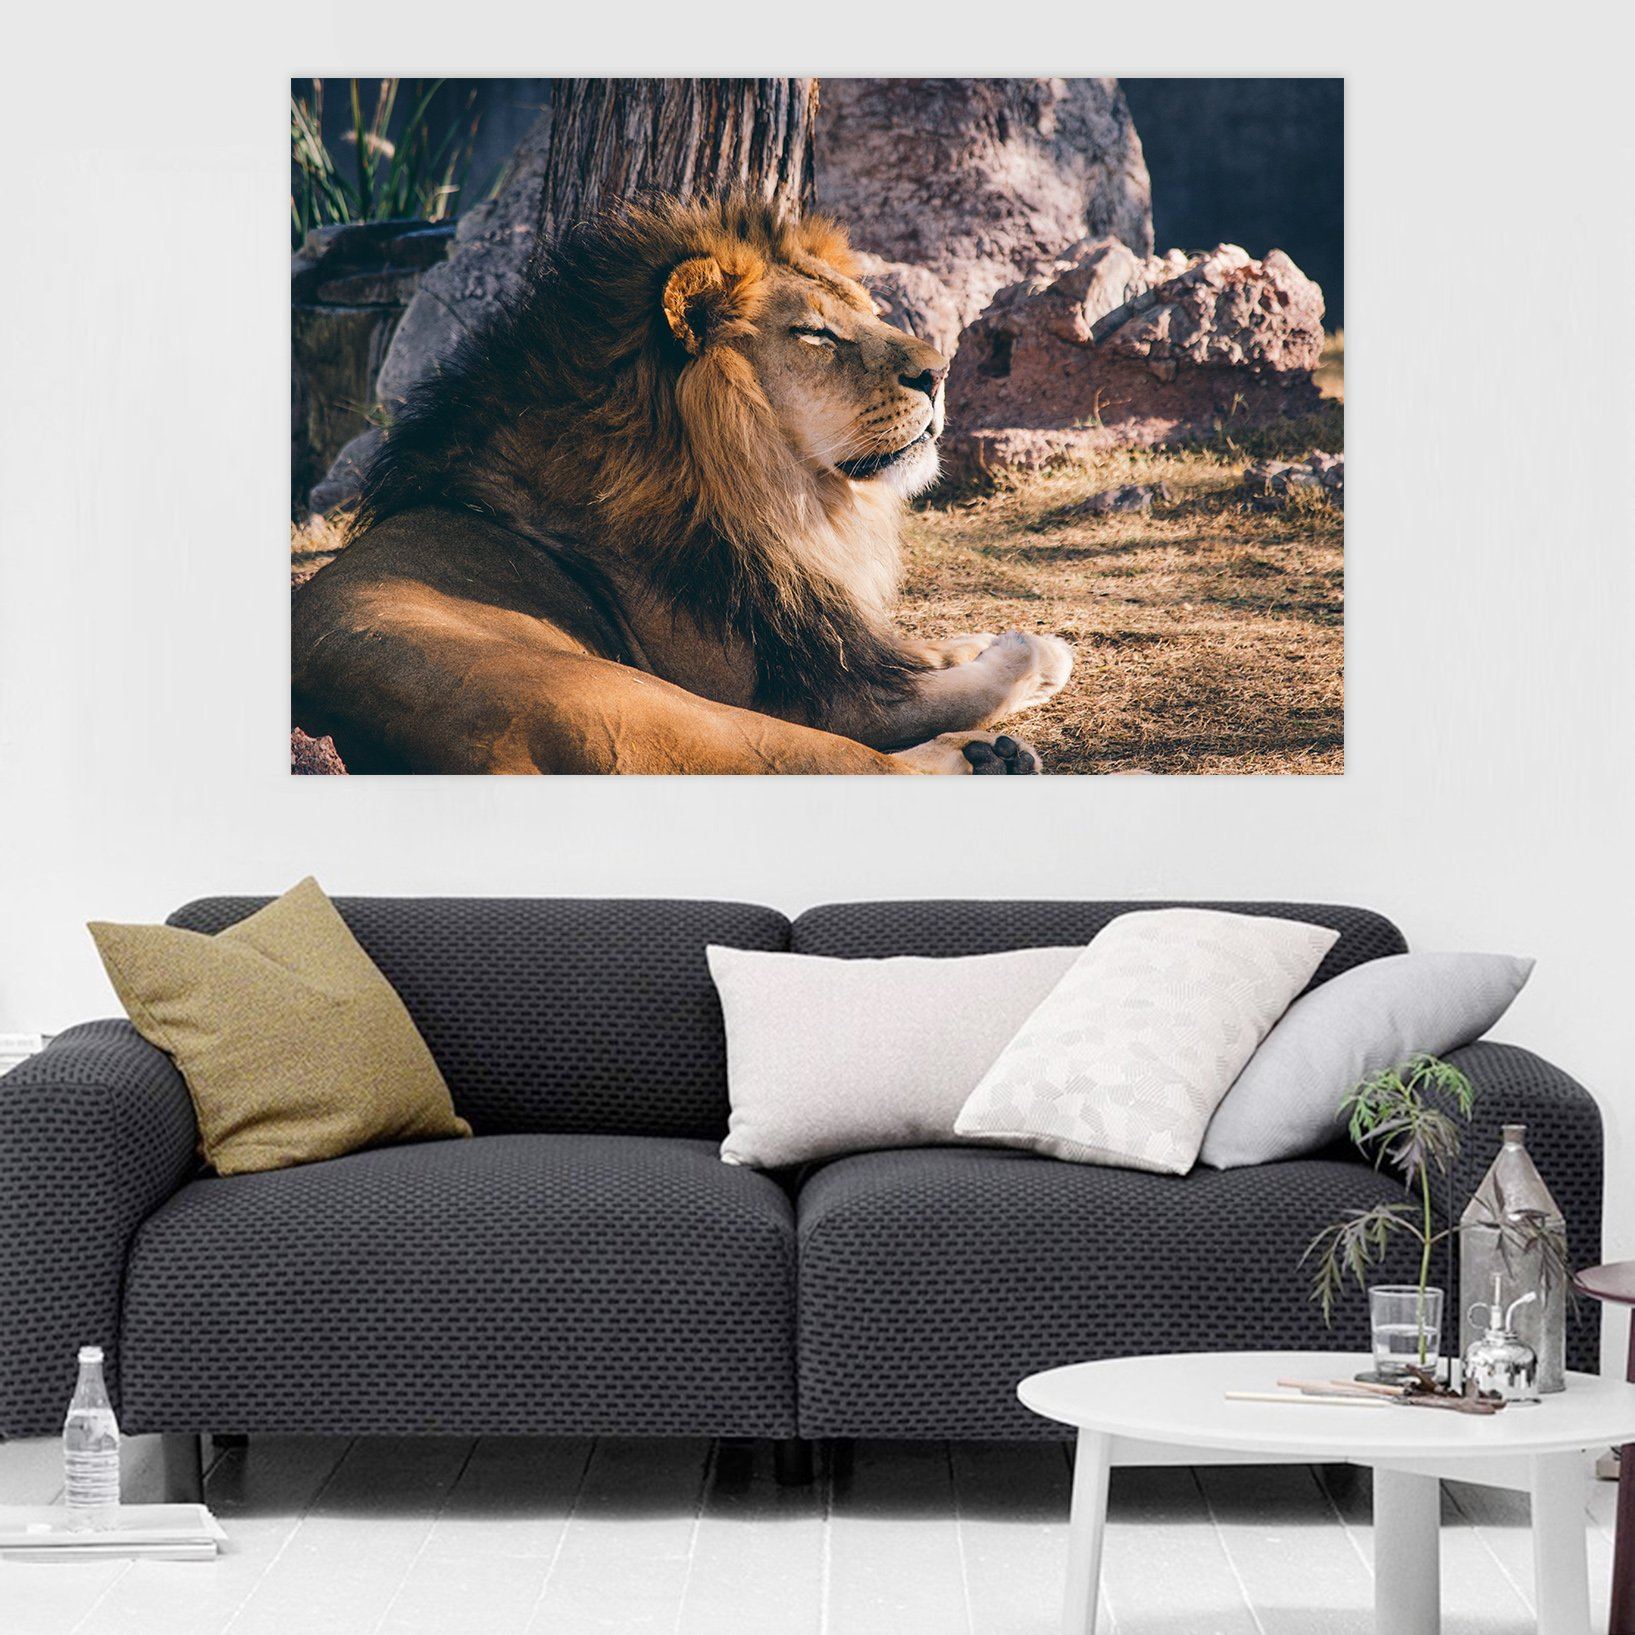 3D Lion 93 Animal Wall Stickers Wallpaper AJ Wallpaper 2 